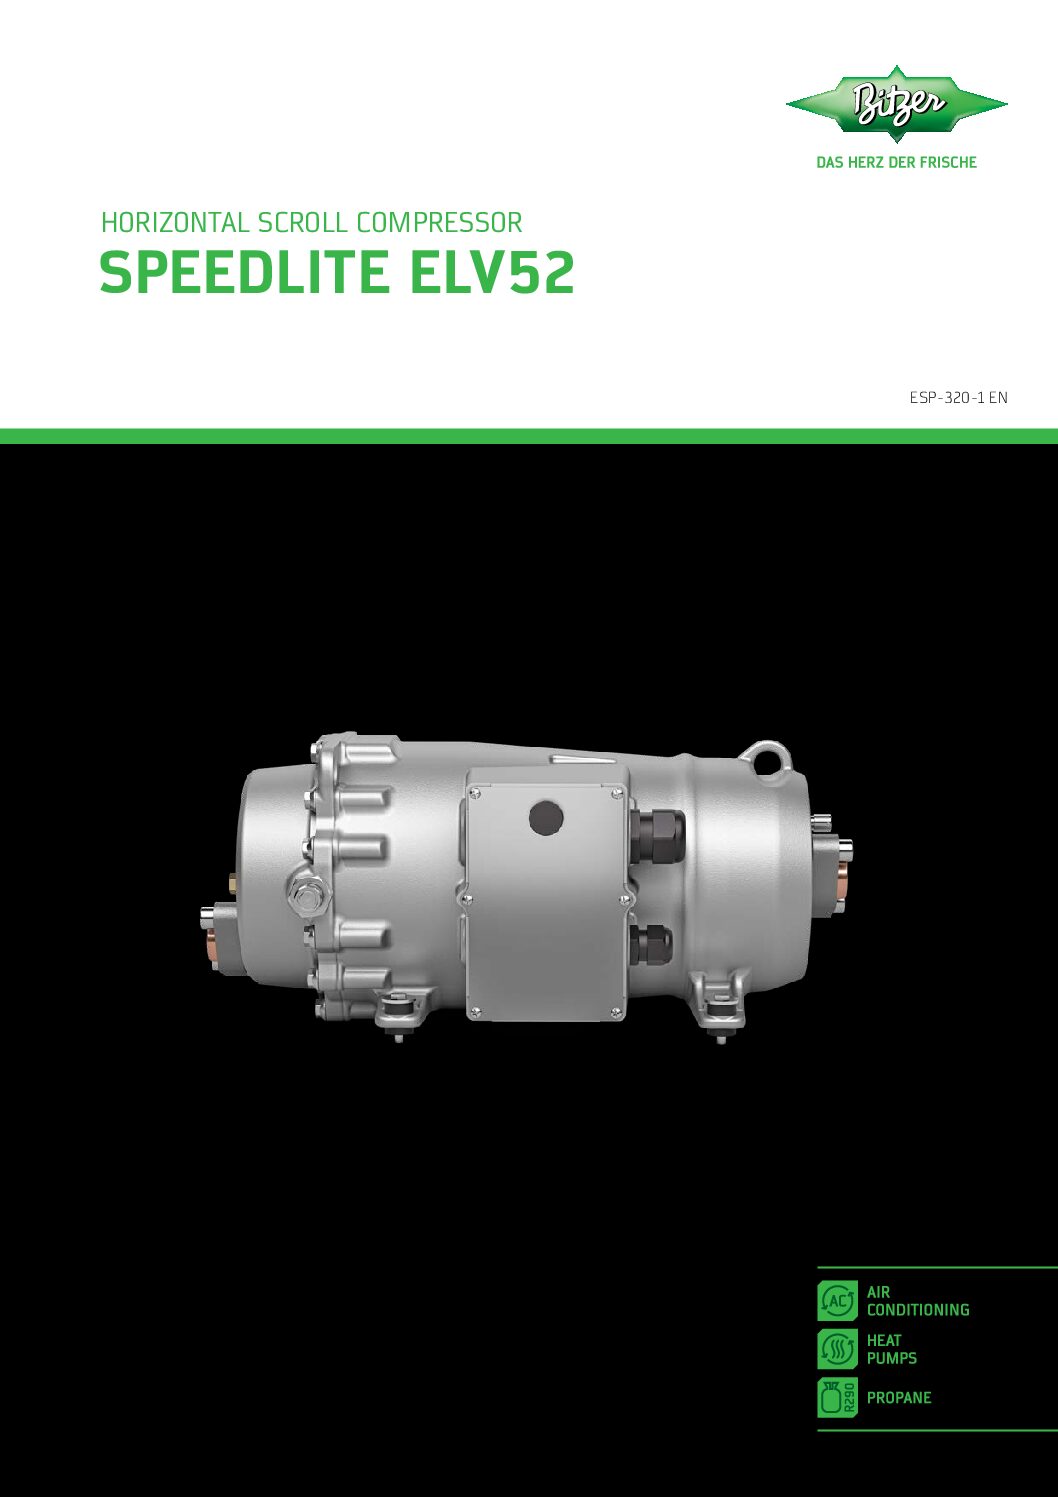 BITZER Horizontal Scroll Compressor SPEEDLITE ELV52